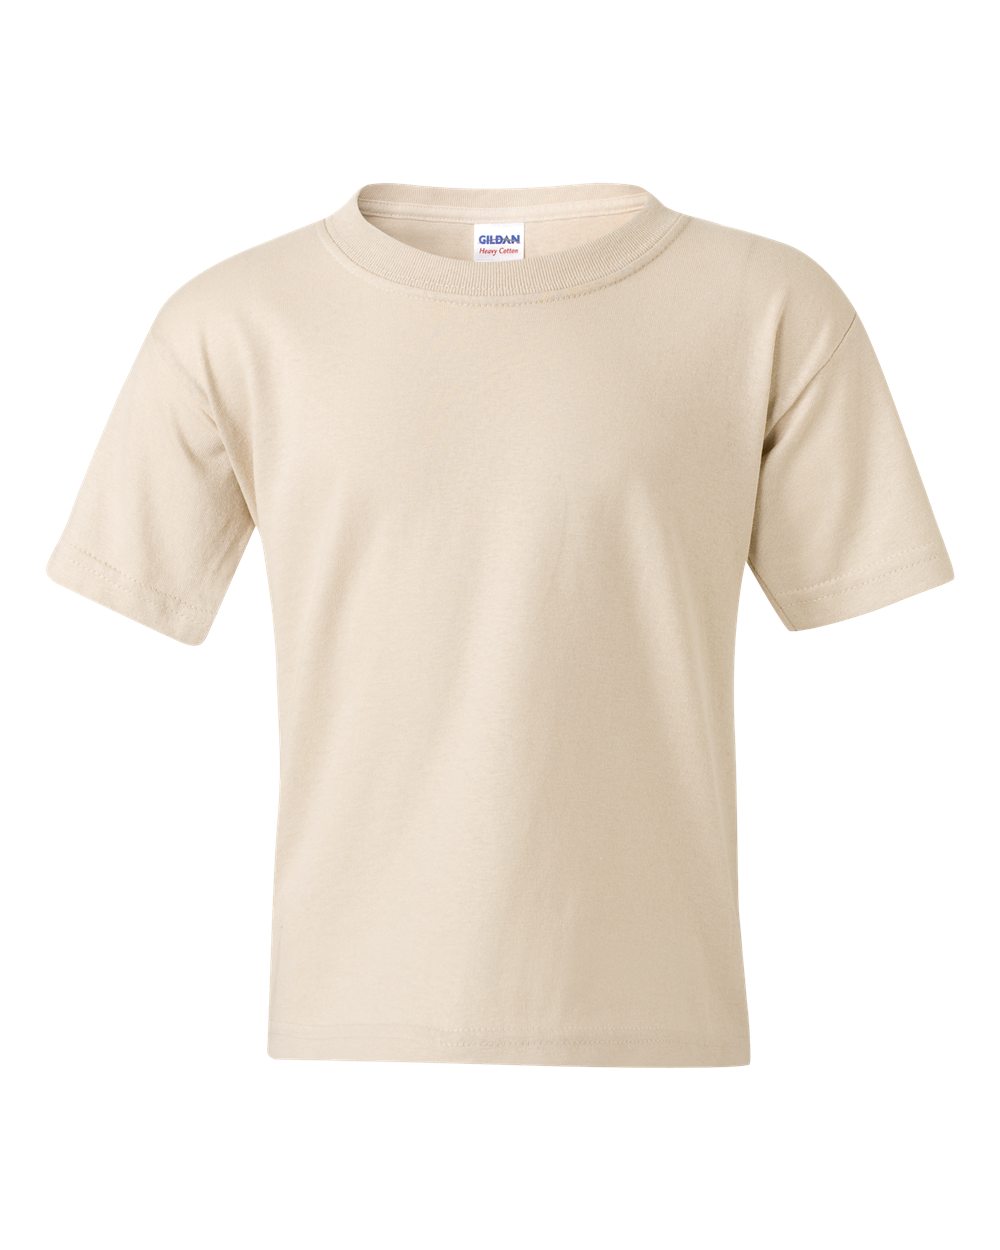 Kids Military T-Shirt - SAND